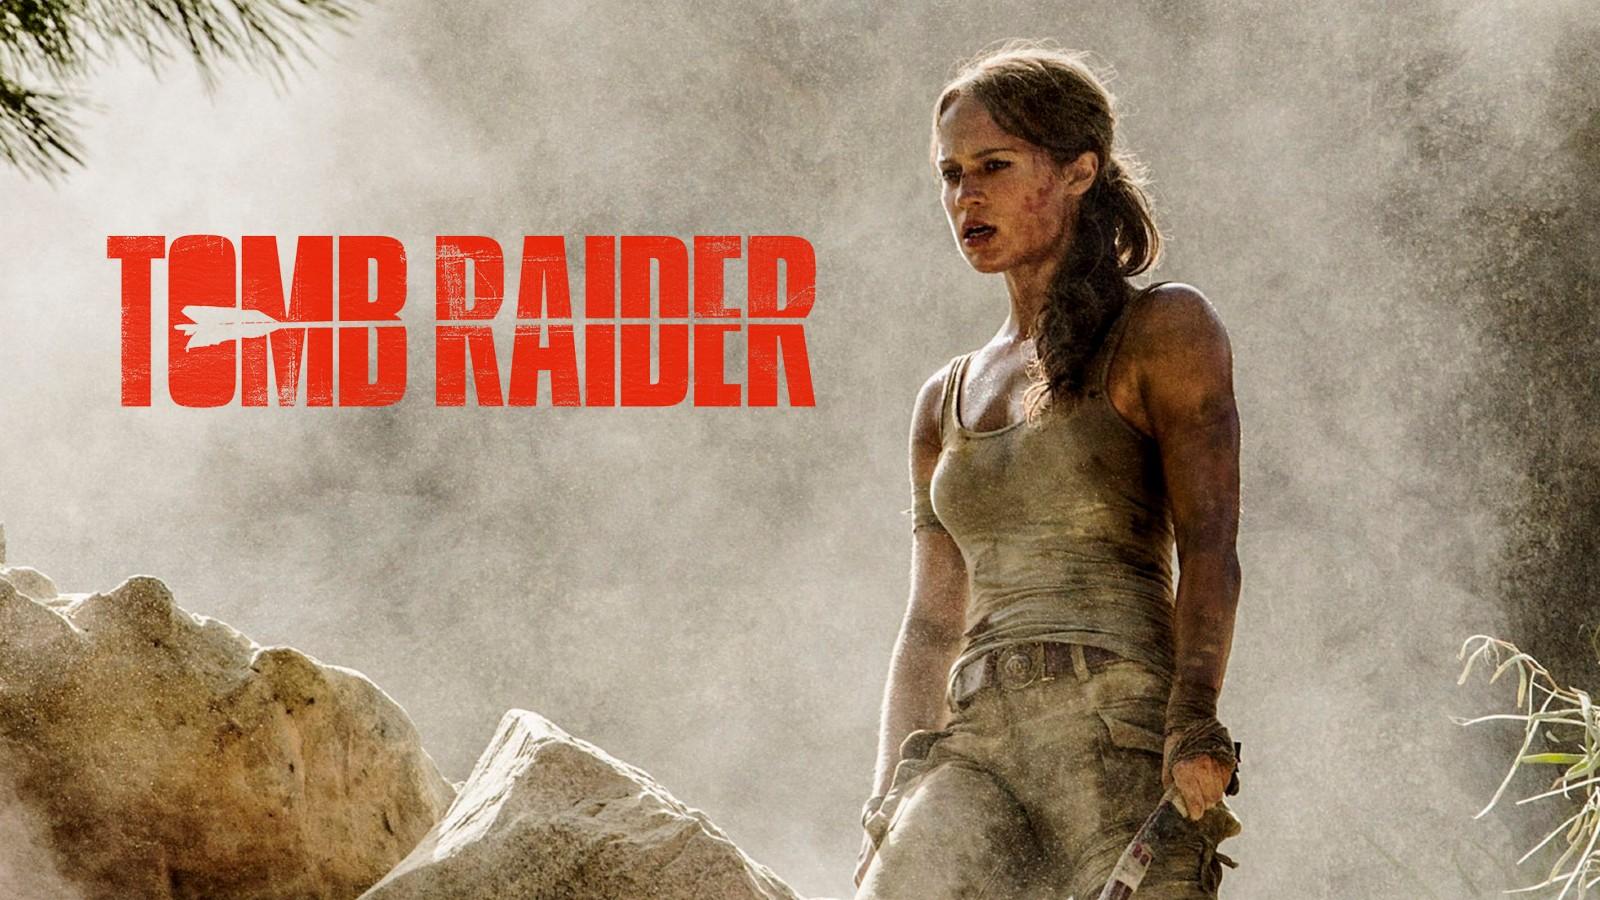 Tomb Raider movie rights